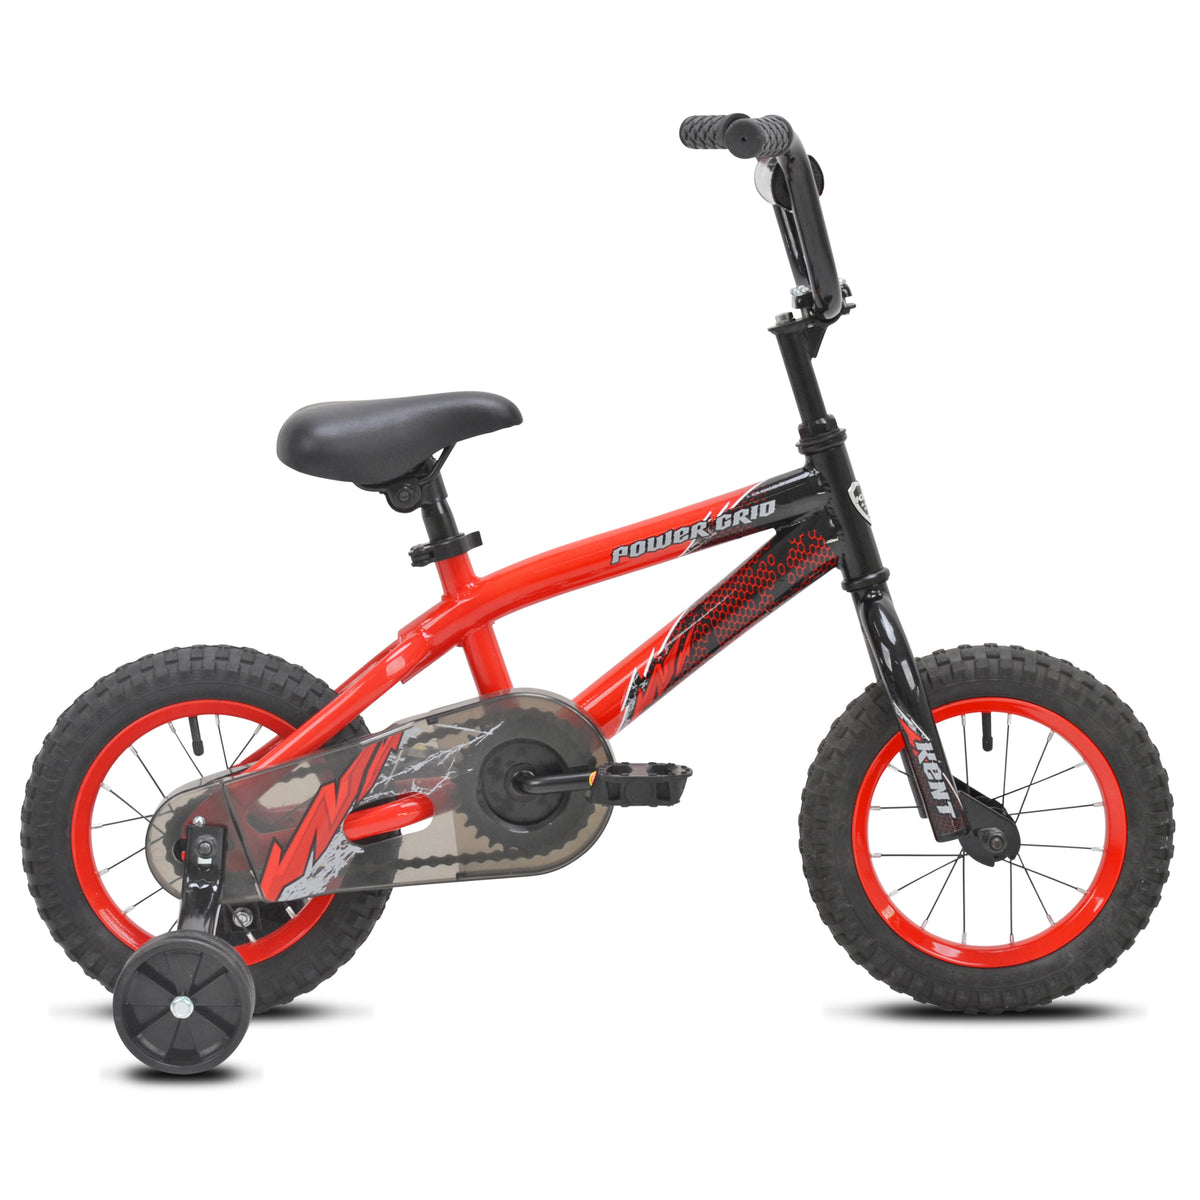 12" Kent Power Grid | BMX Bike for Kids Ages 2-4